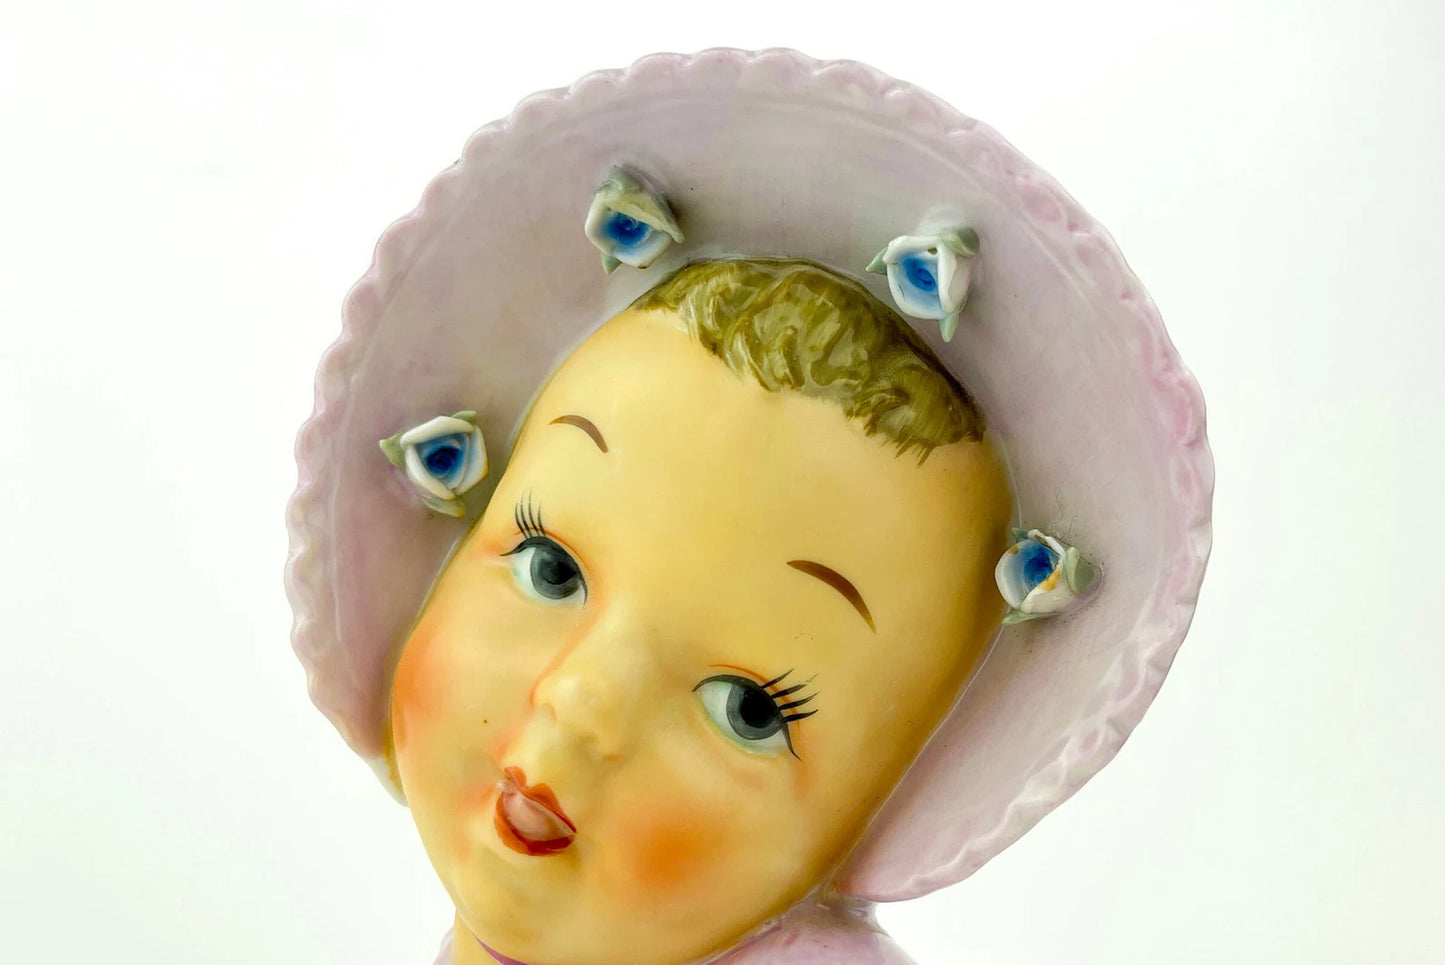 Vintage Baby Girl Ceramic Head Vase, Pink/lavender, Flower buds on Pink Bonnet, Whimsical Planter Mid Century Kitschy Nursery Decor UCAGCO